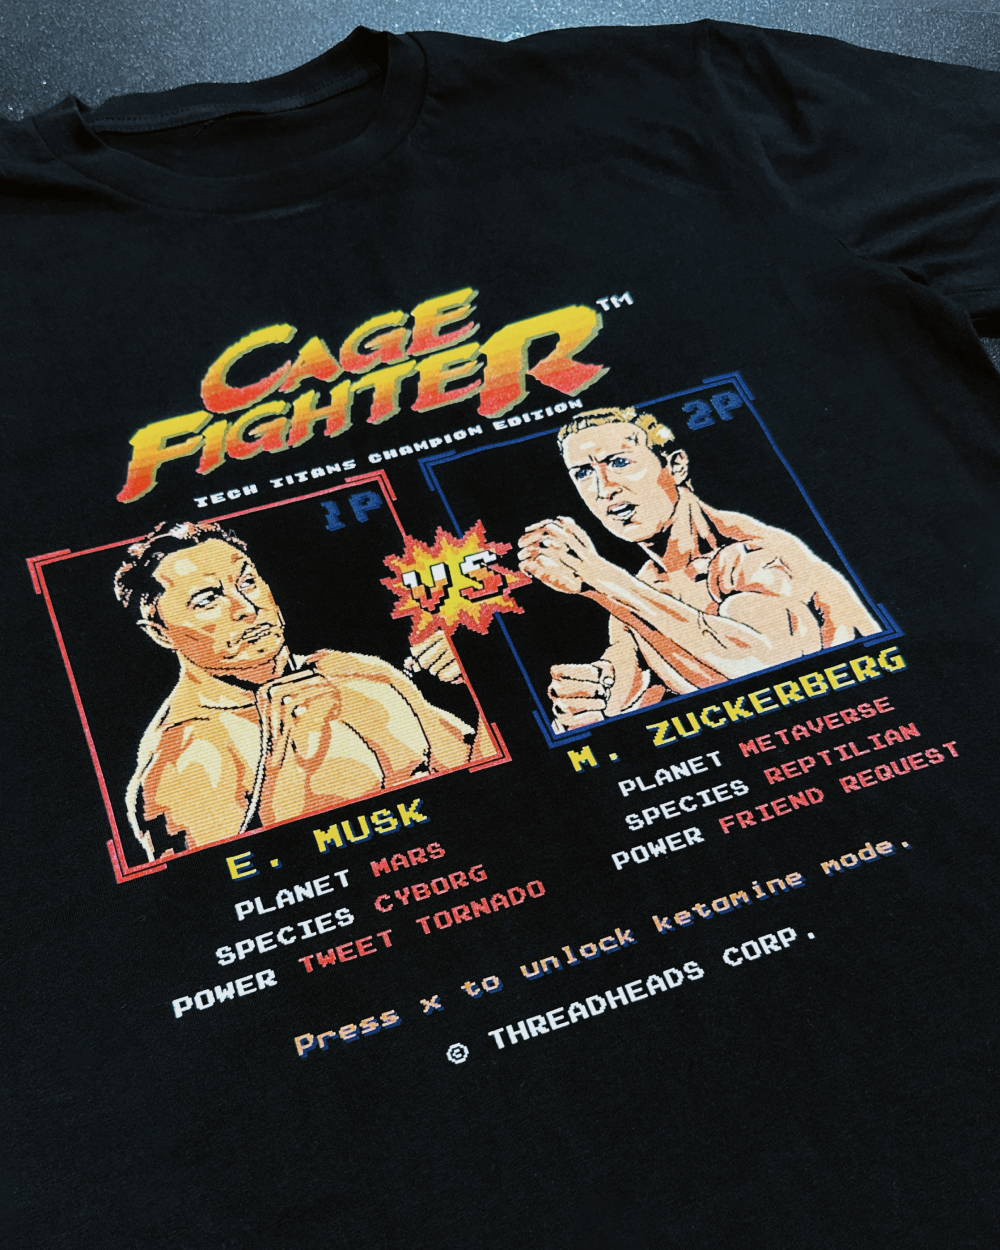 Cage Fighter - Elon vs Zuckerberg T-Shirt Australia Online